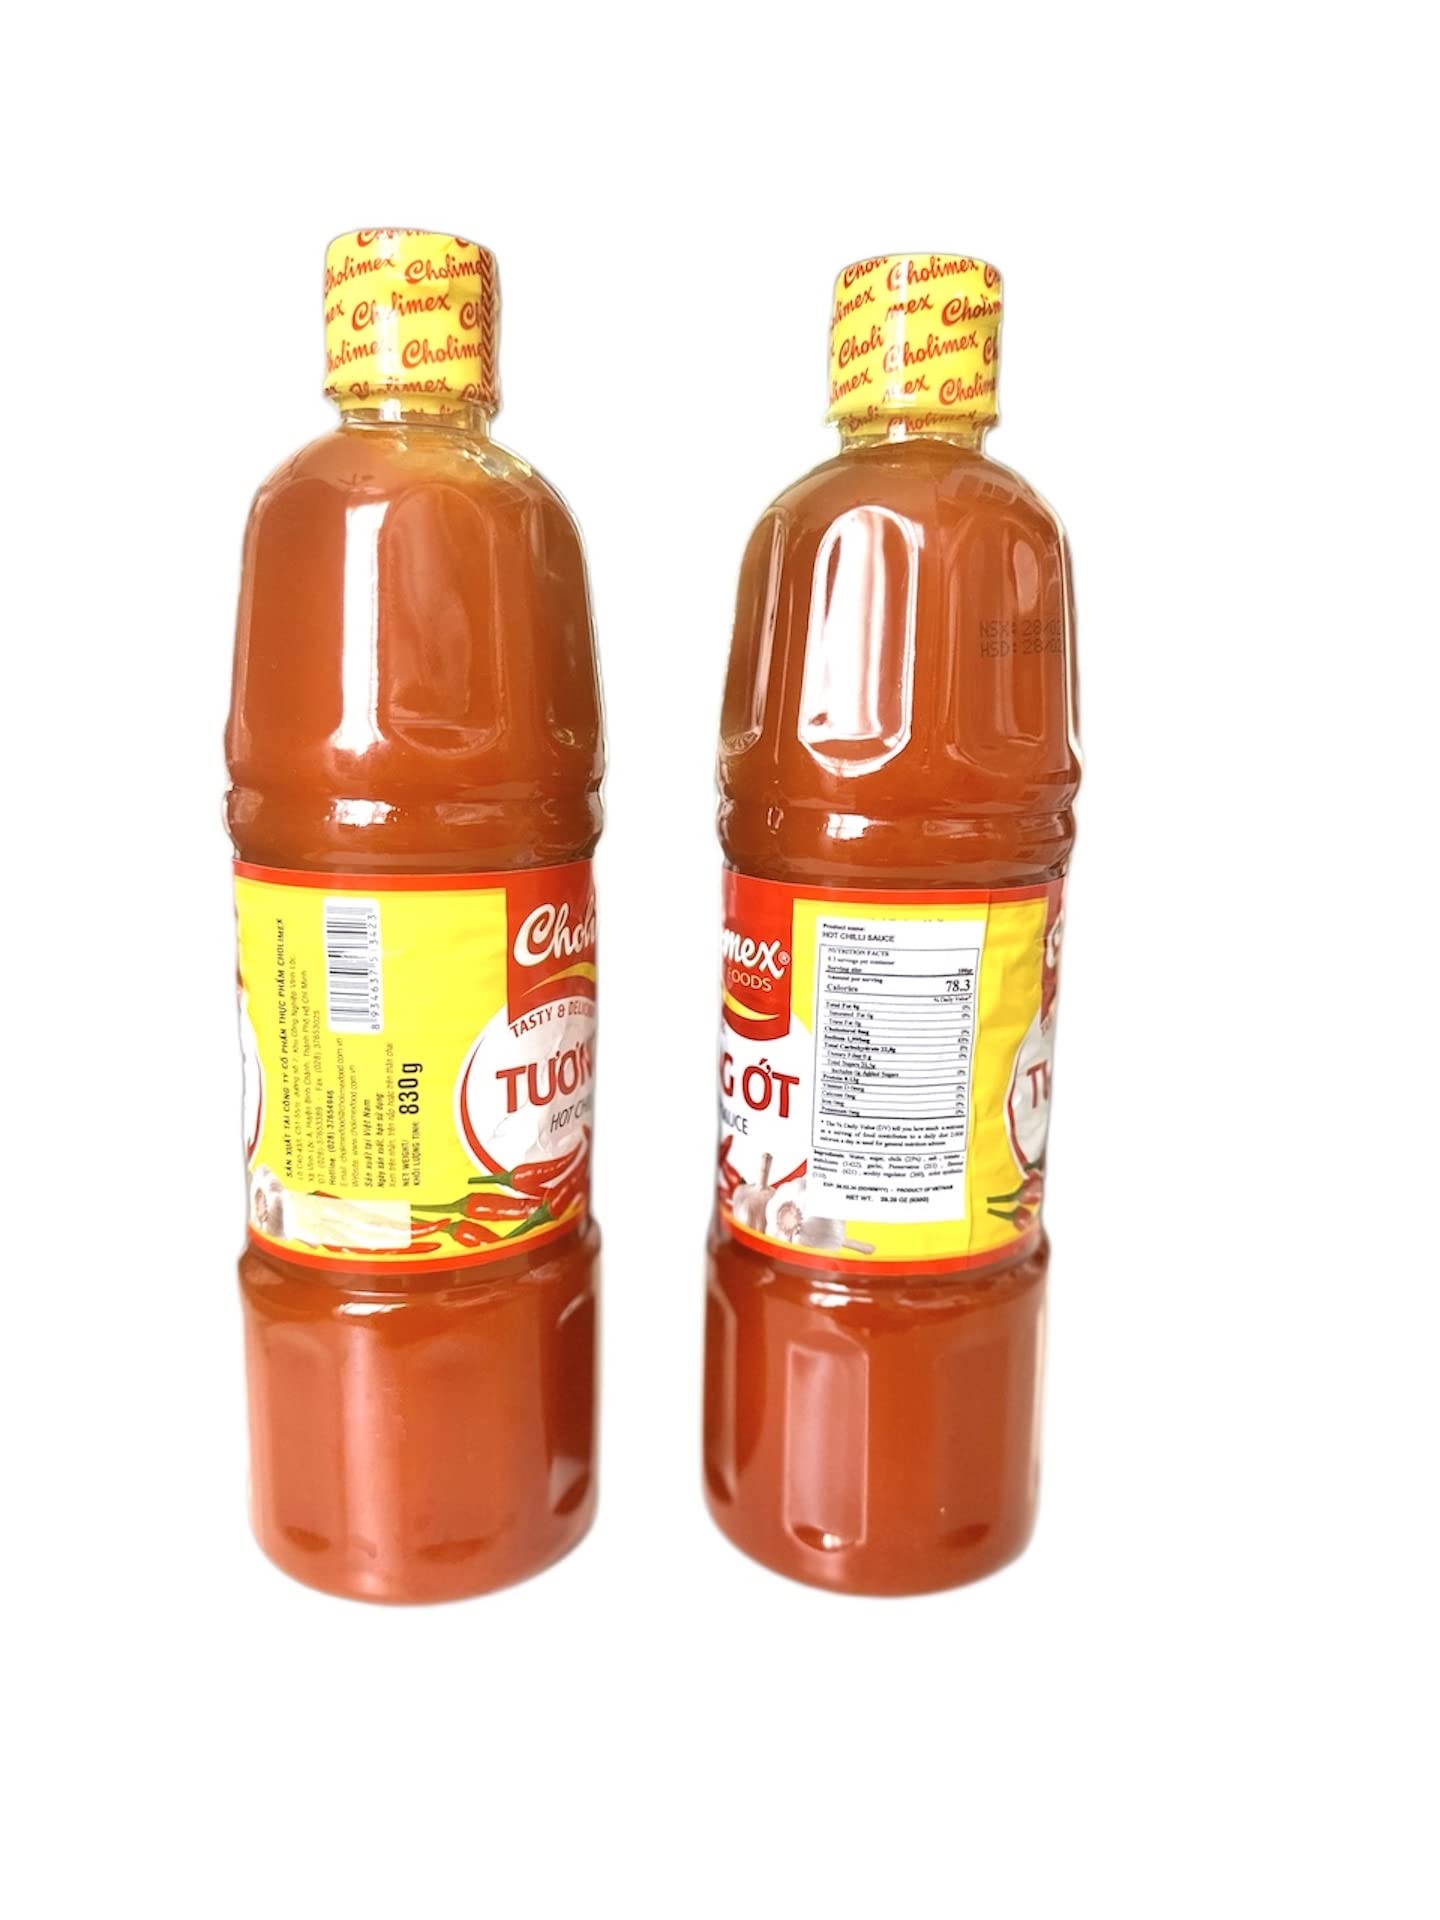 CHOLIMEX Chili Hot Sauce - Tuong Ot 830g - 29.2oz (pack of 2)